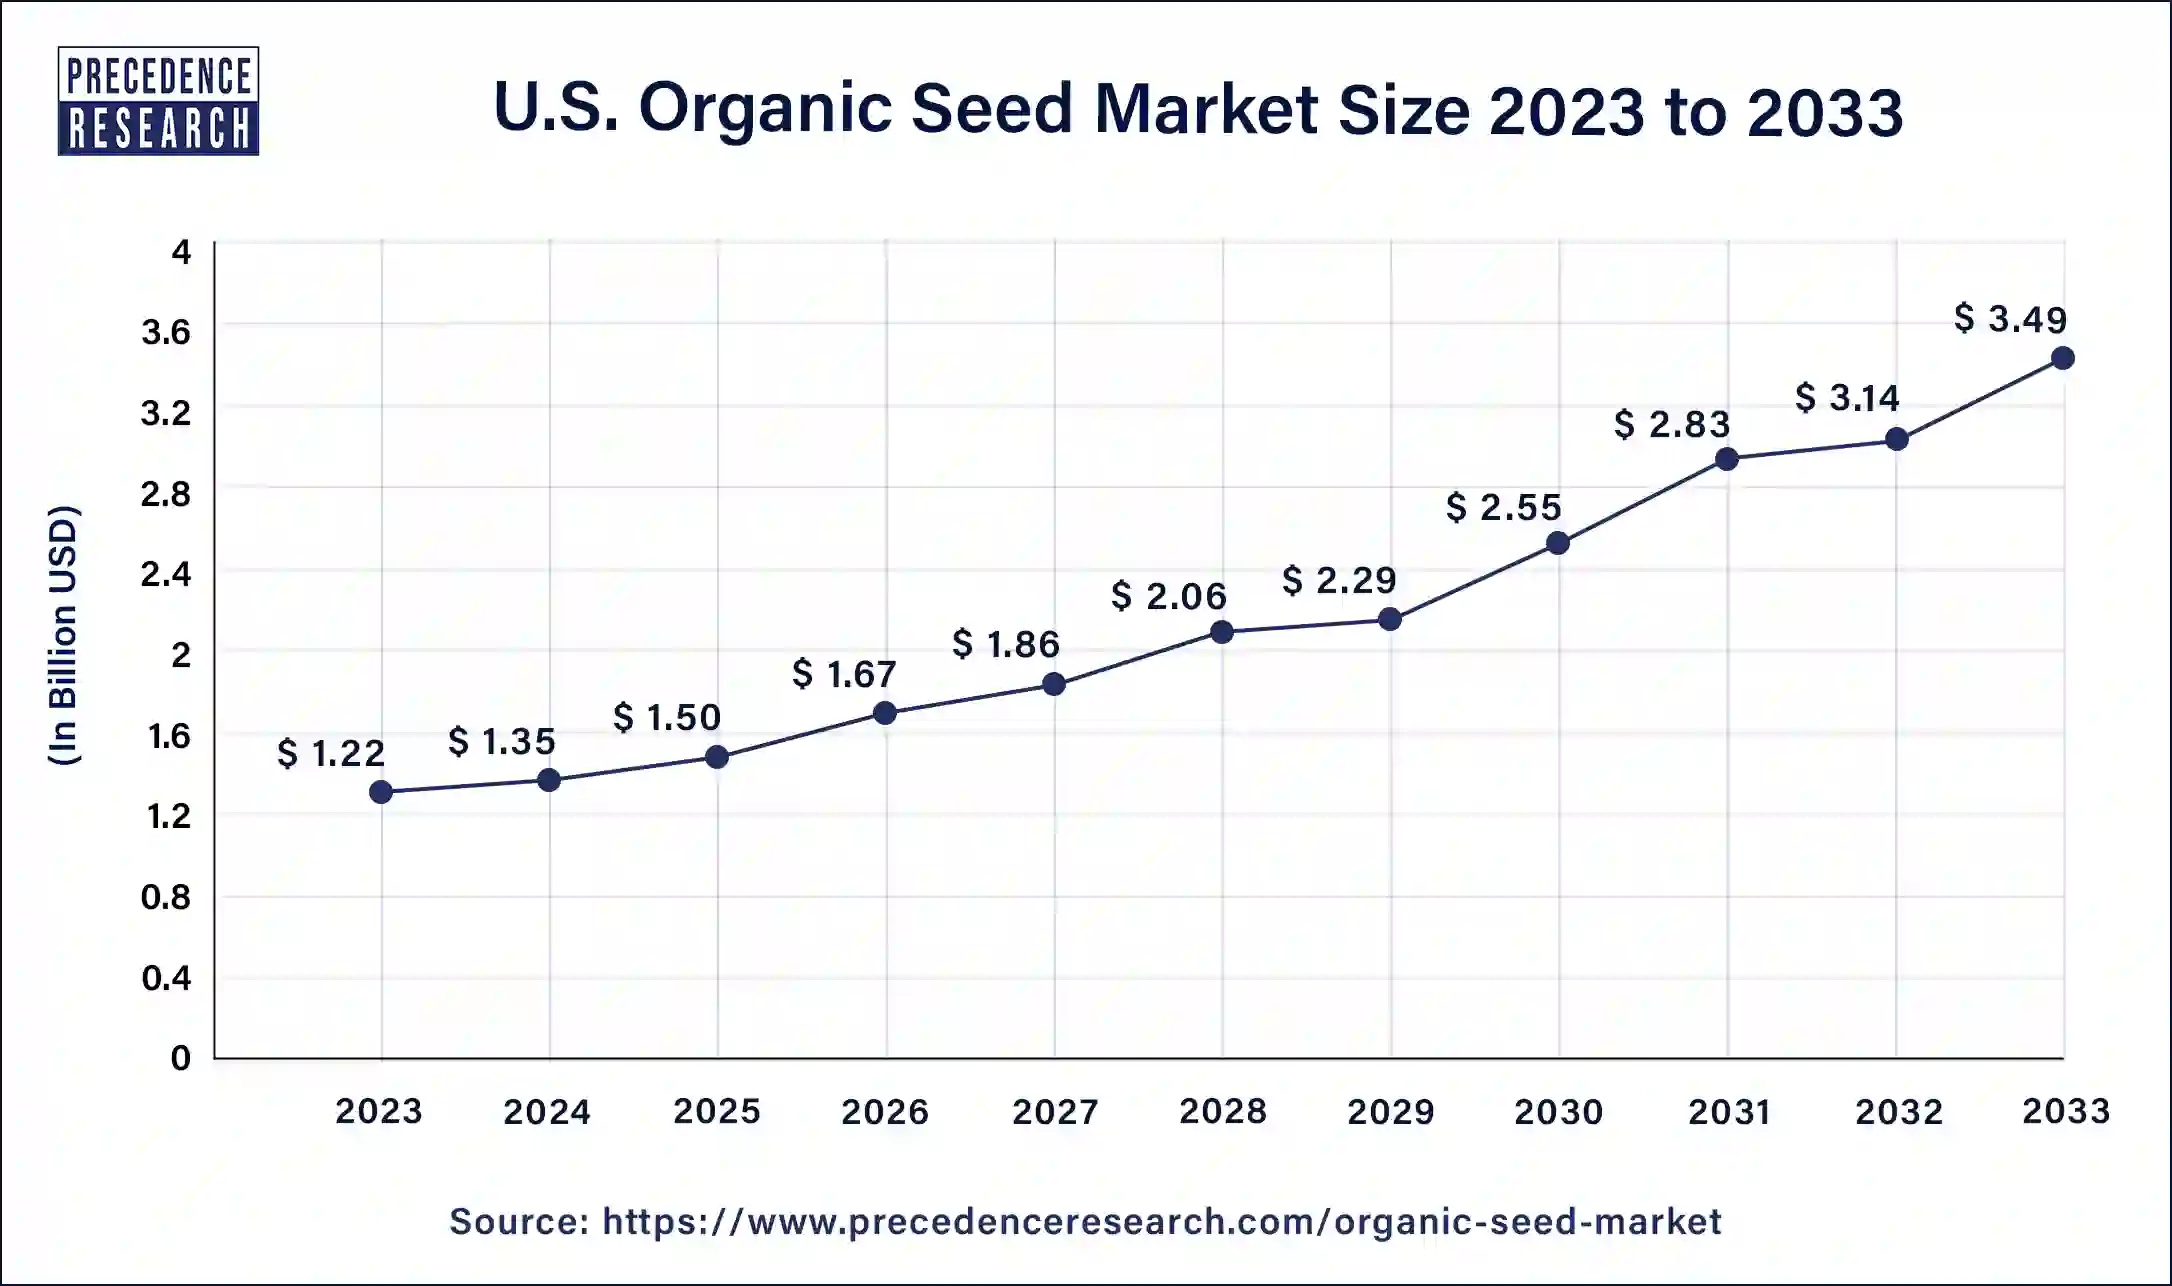 U.S. Organic Seed Market Size 2024 to 2033